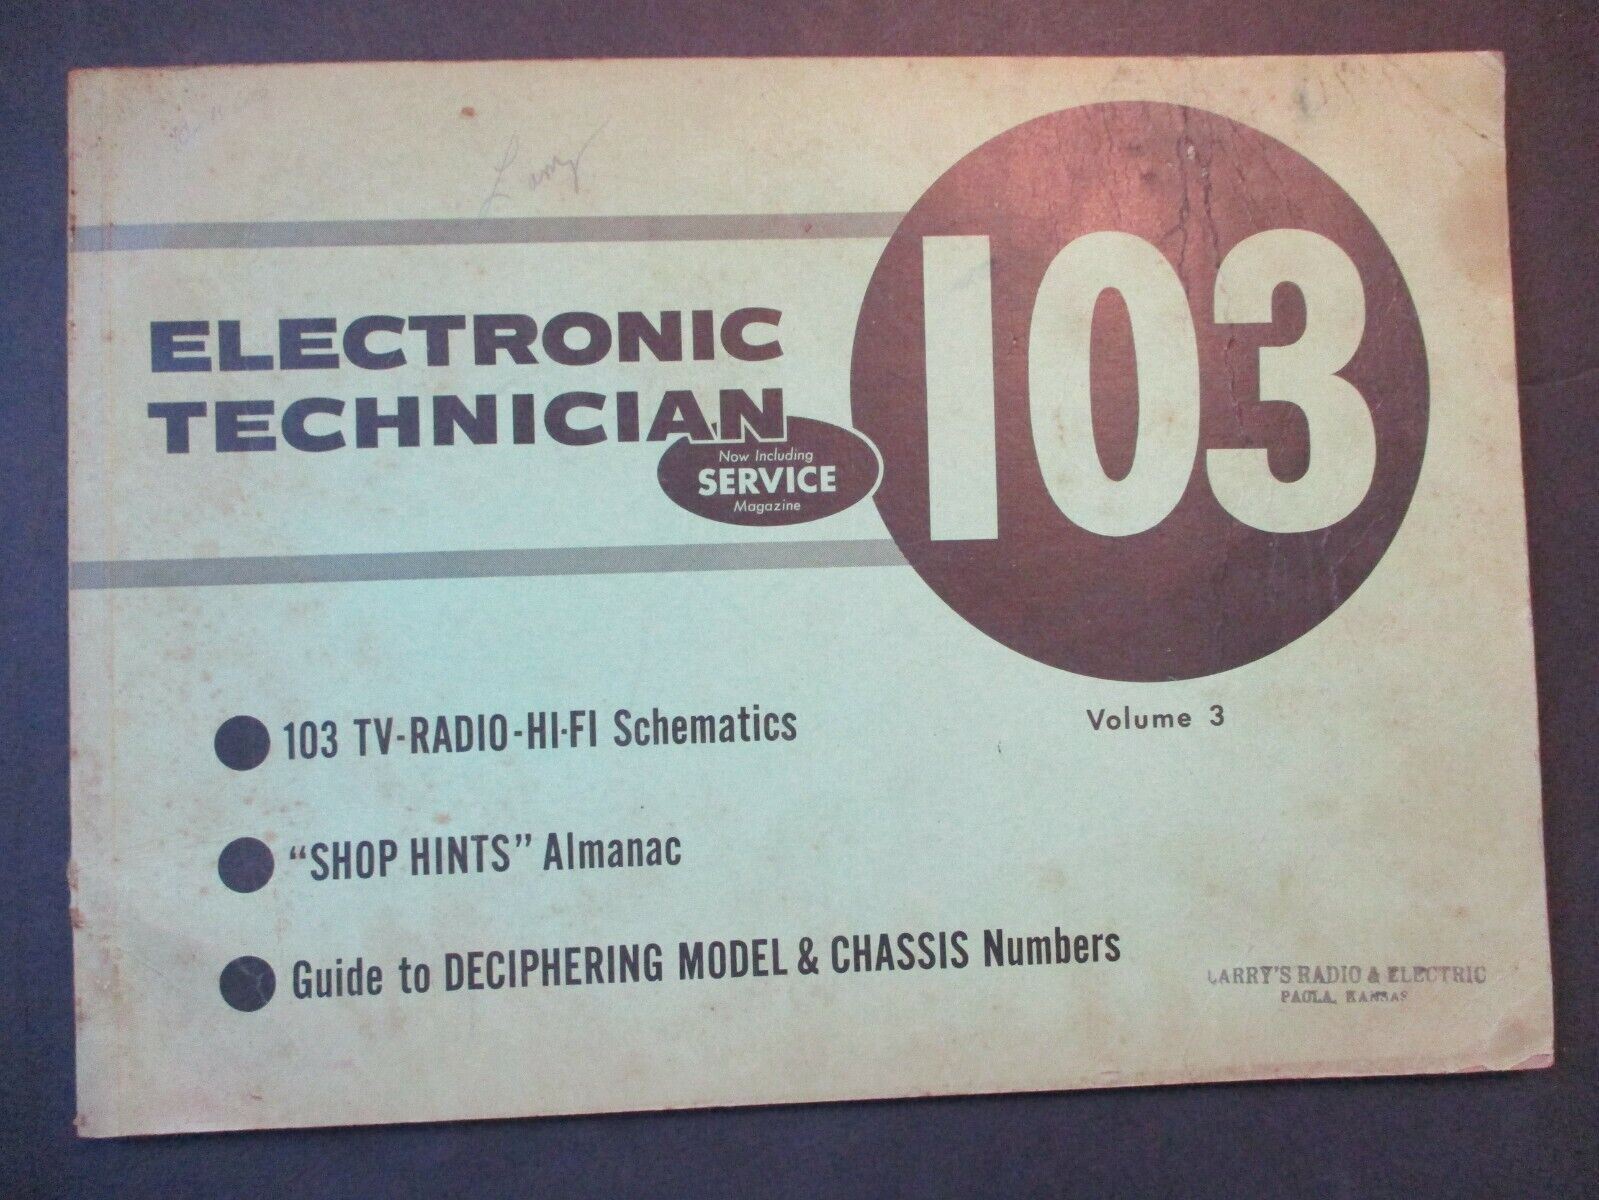 Electronic Technician 103 Volume 3 manual